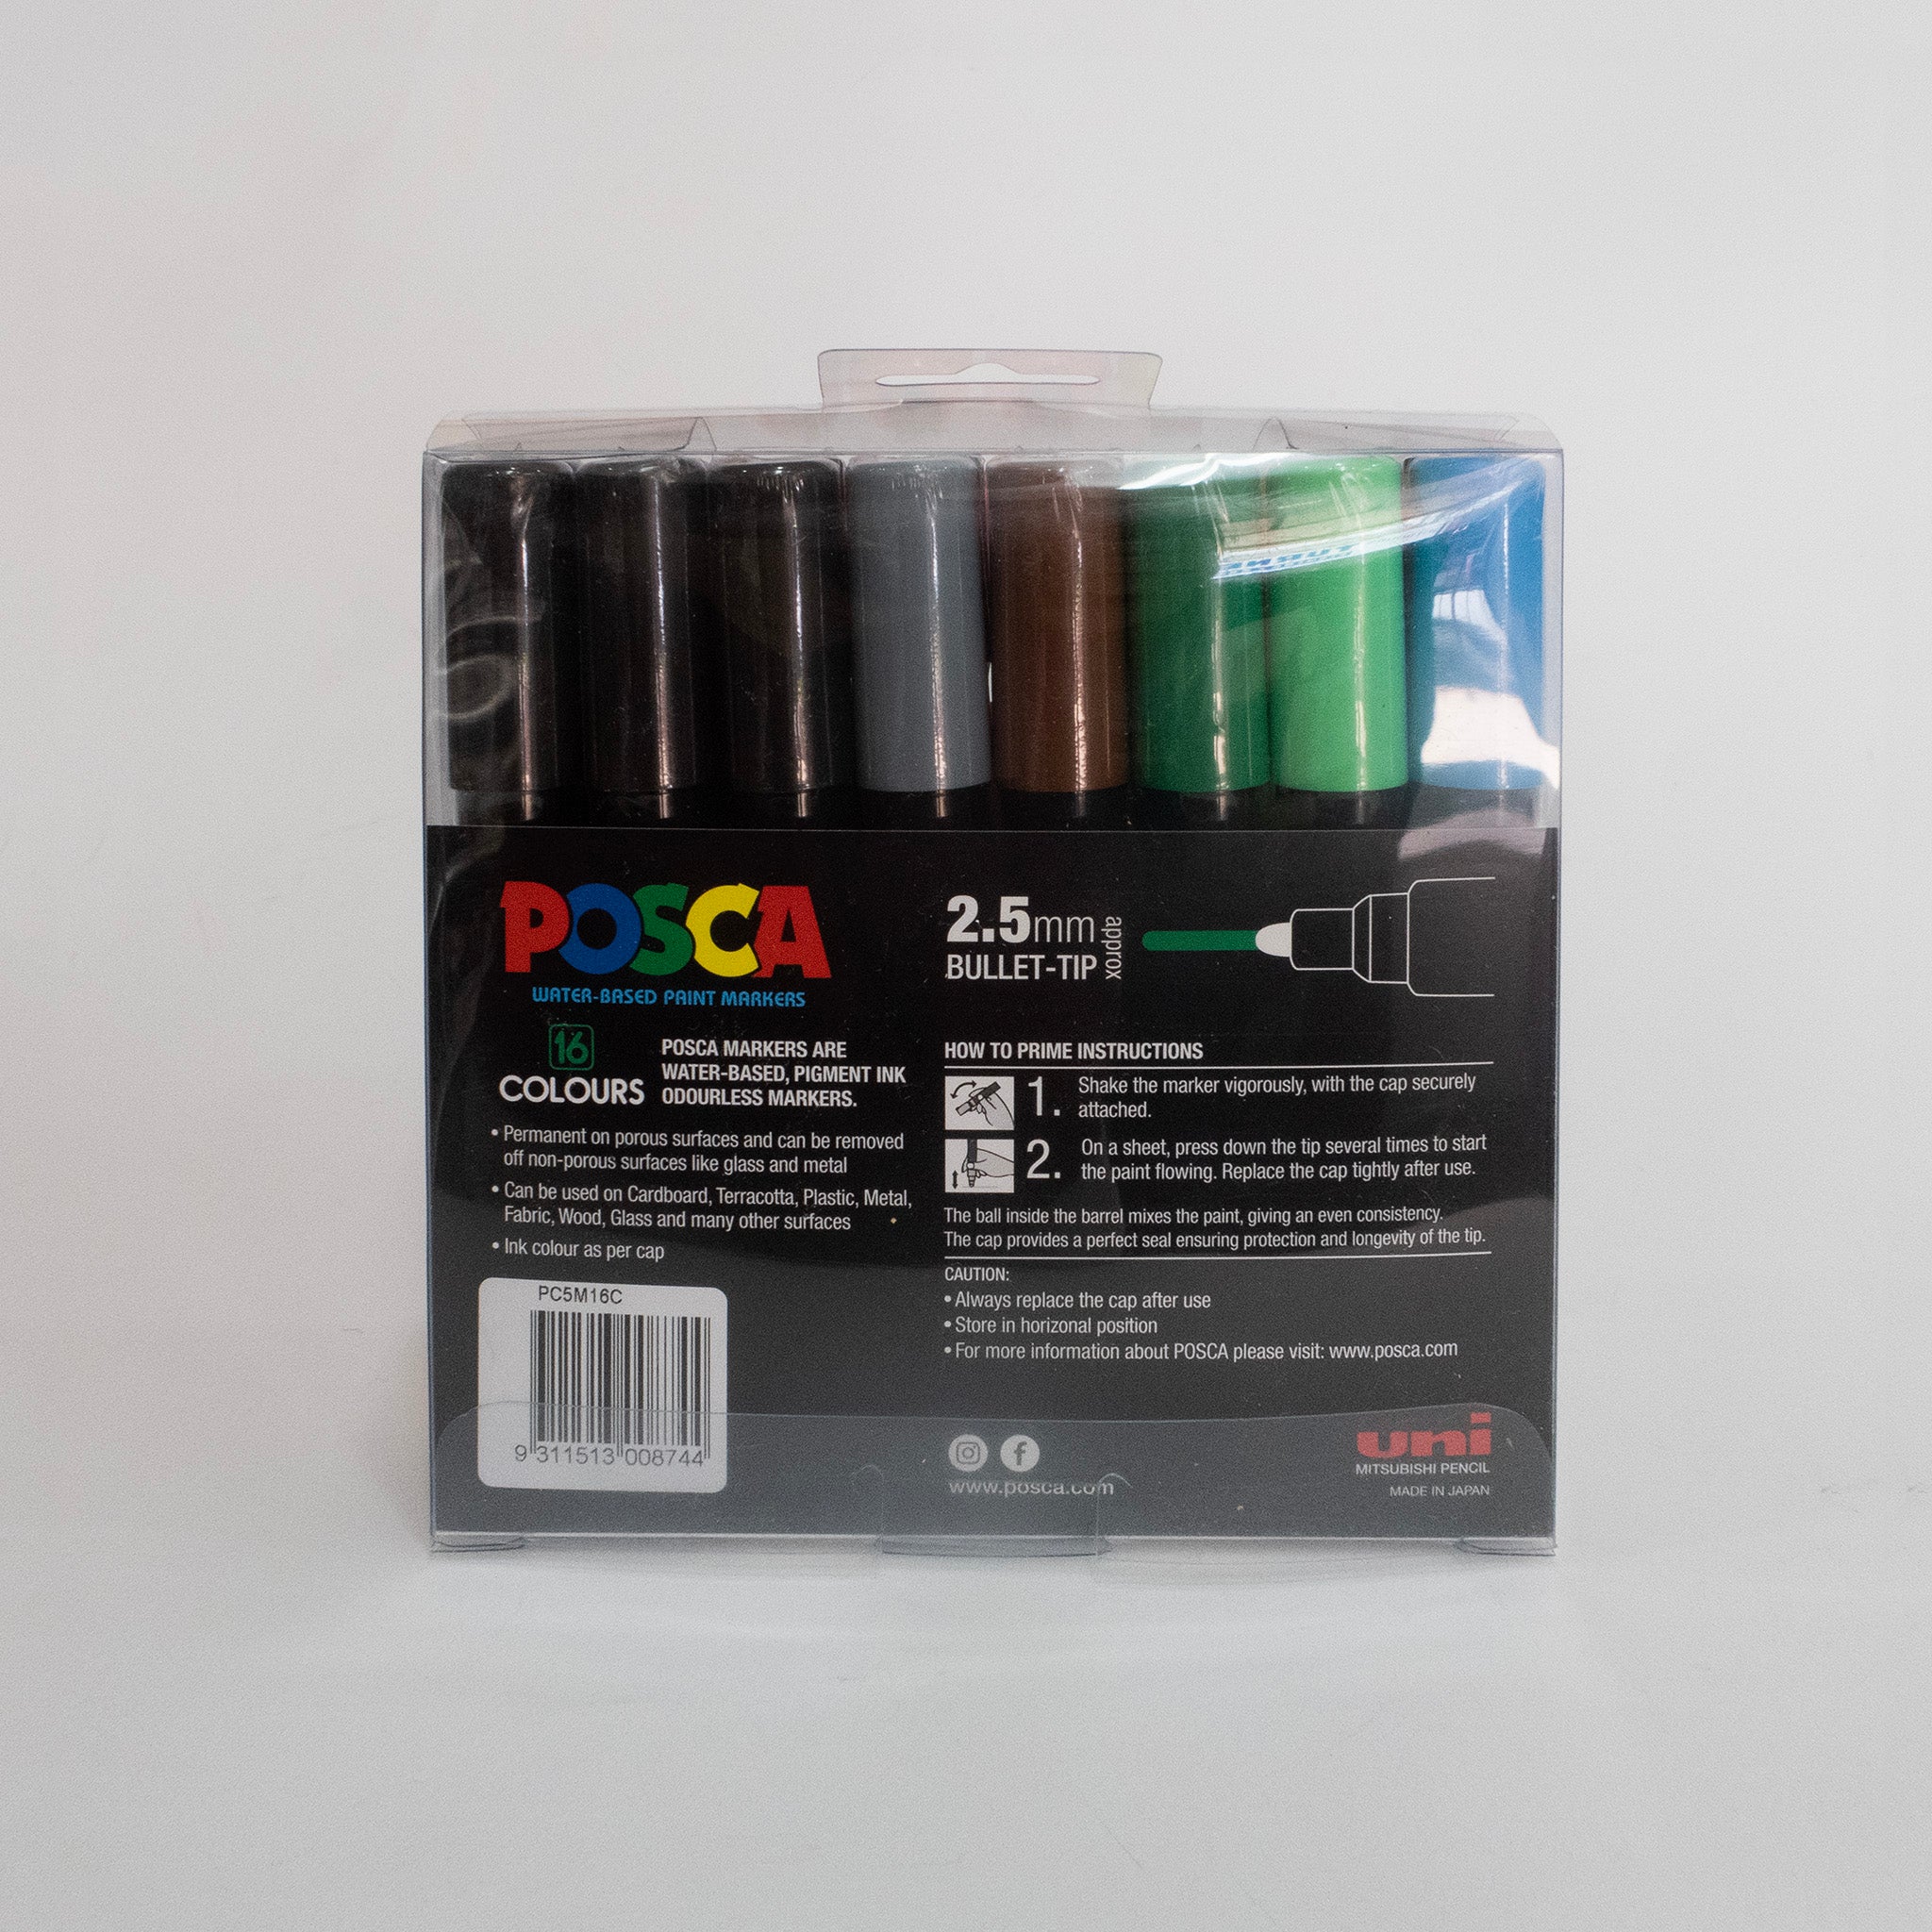 Posca PC-5M Bright Pens Set of 16